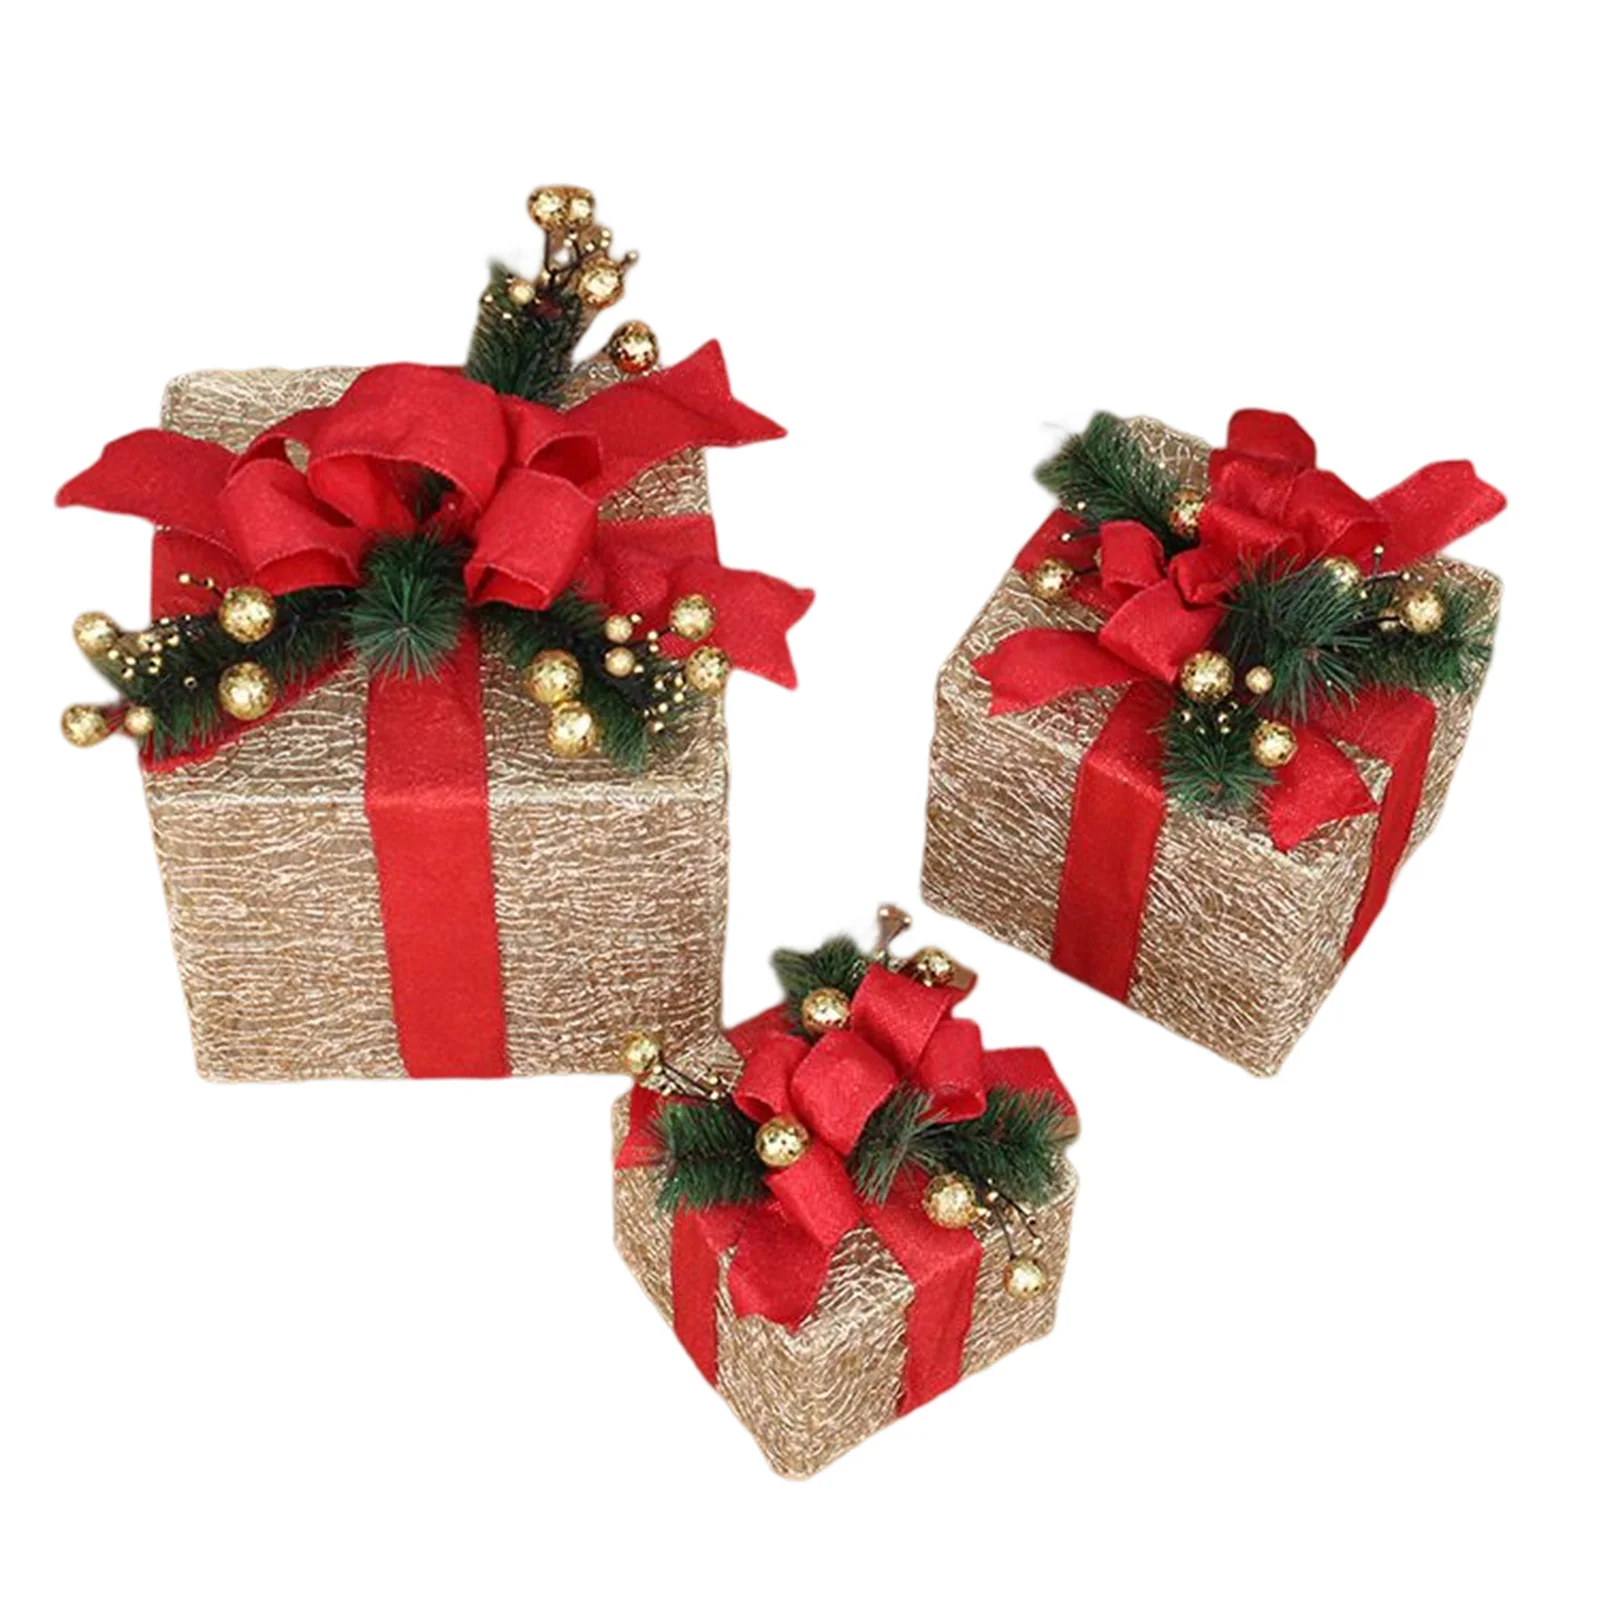 3pcs Christmas Decorative Gift Box Durable Reusable Christmas Decoration Adding More Festive Atmosphere